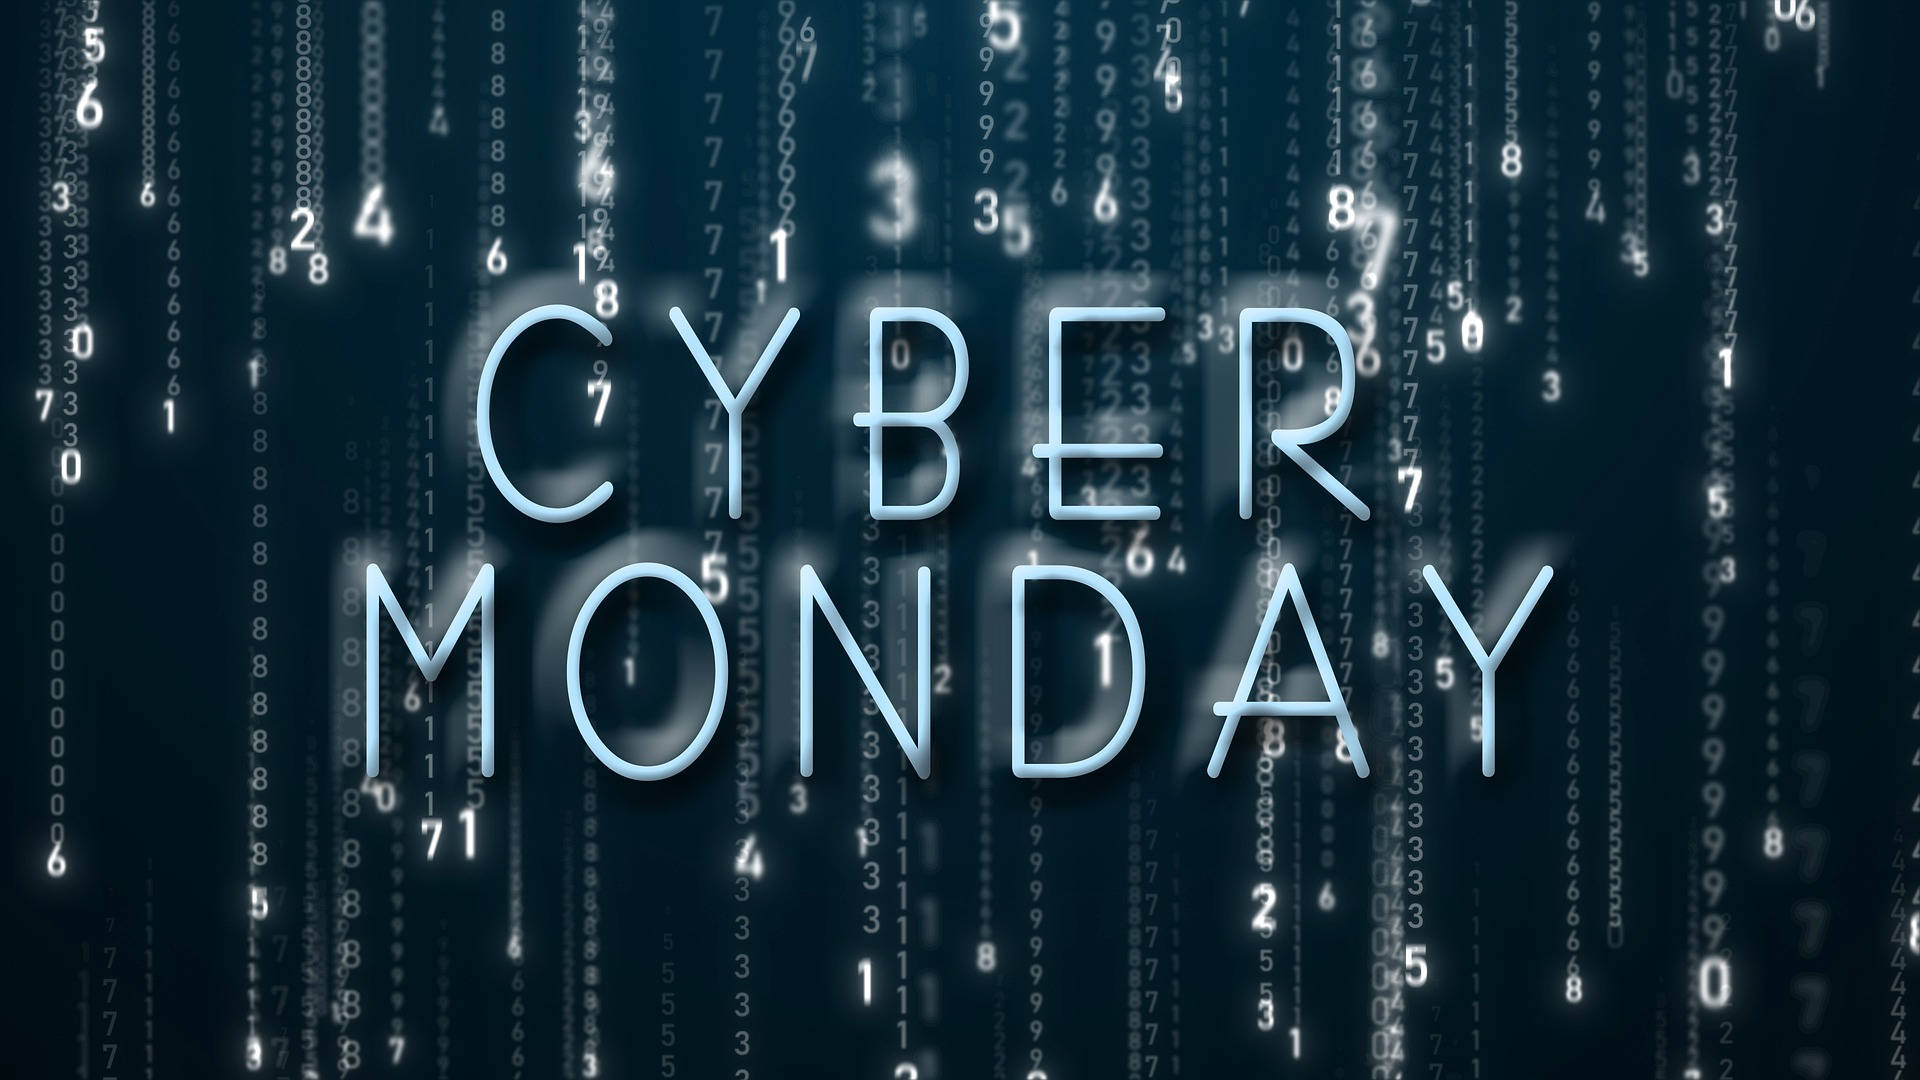 Cyber Monday Stylish Digital Signage